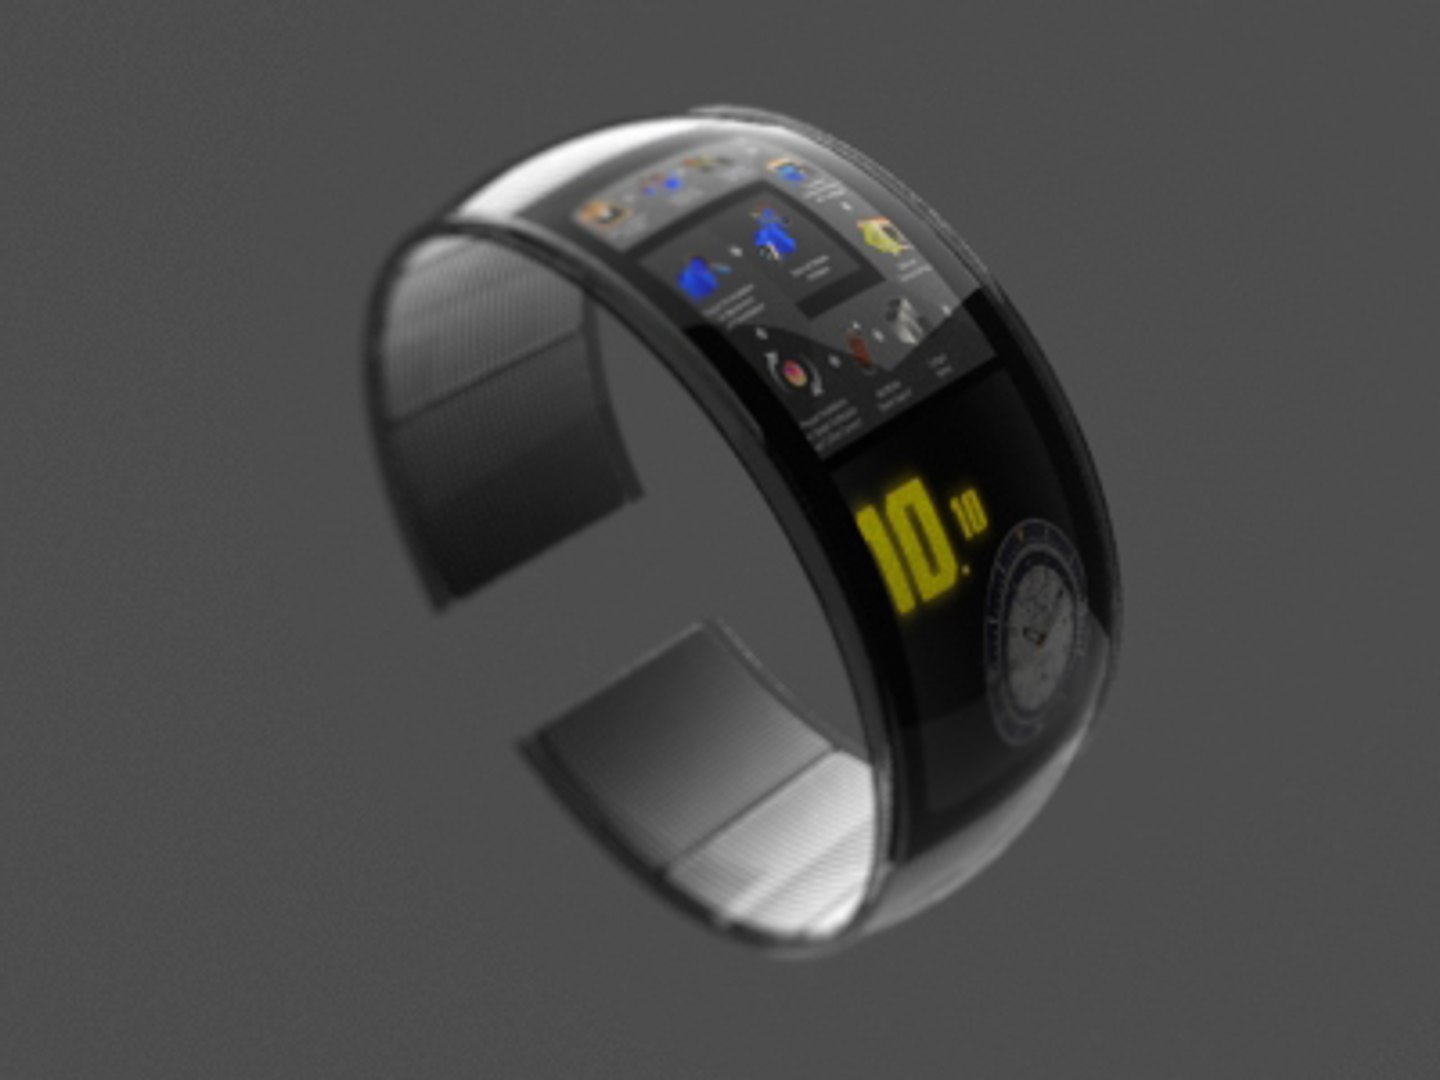 Futuristic Innovative Large Display Smart Watch I WokeBuyer